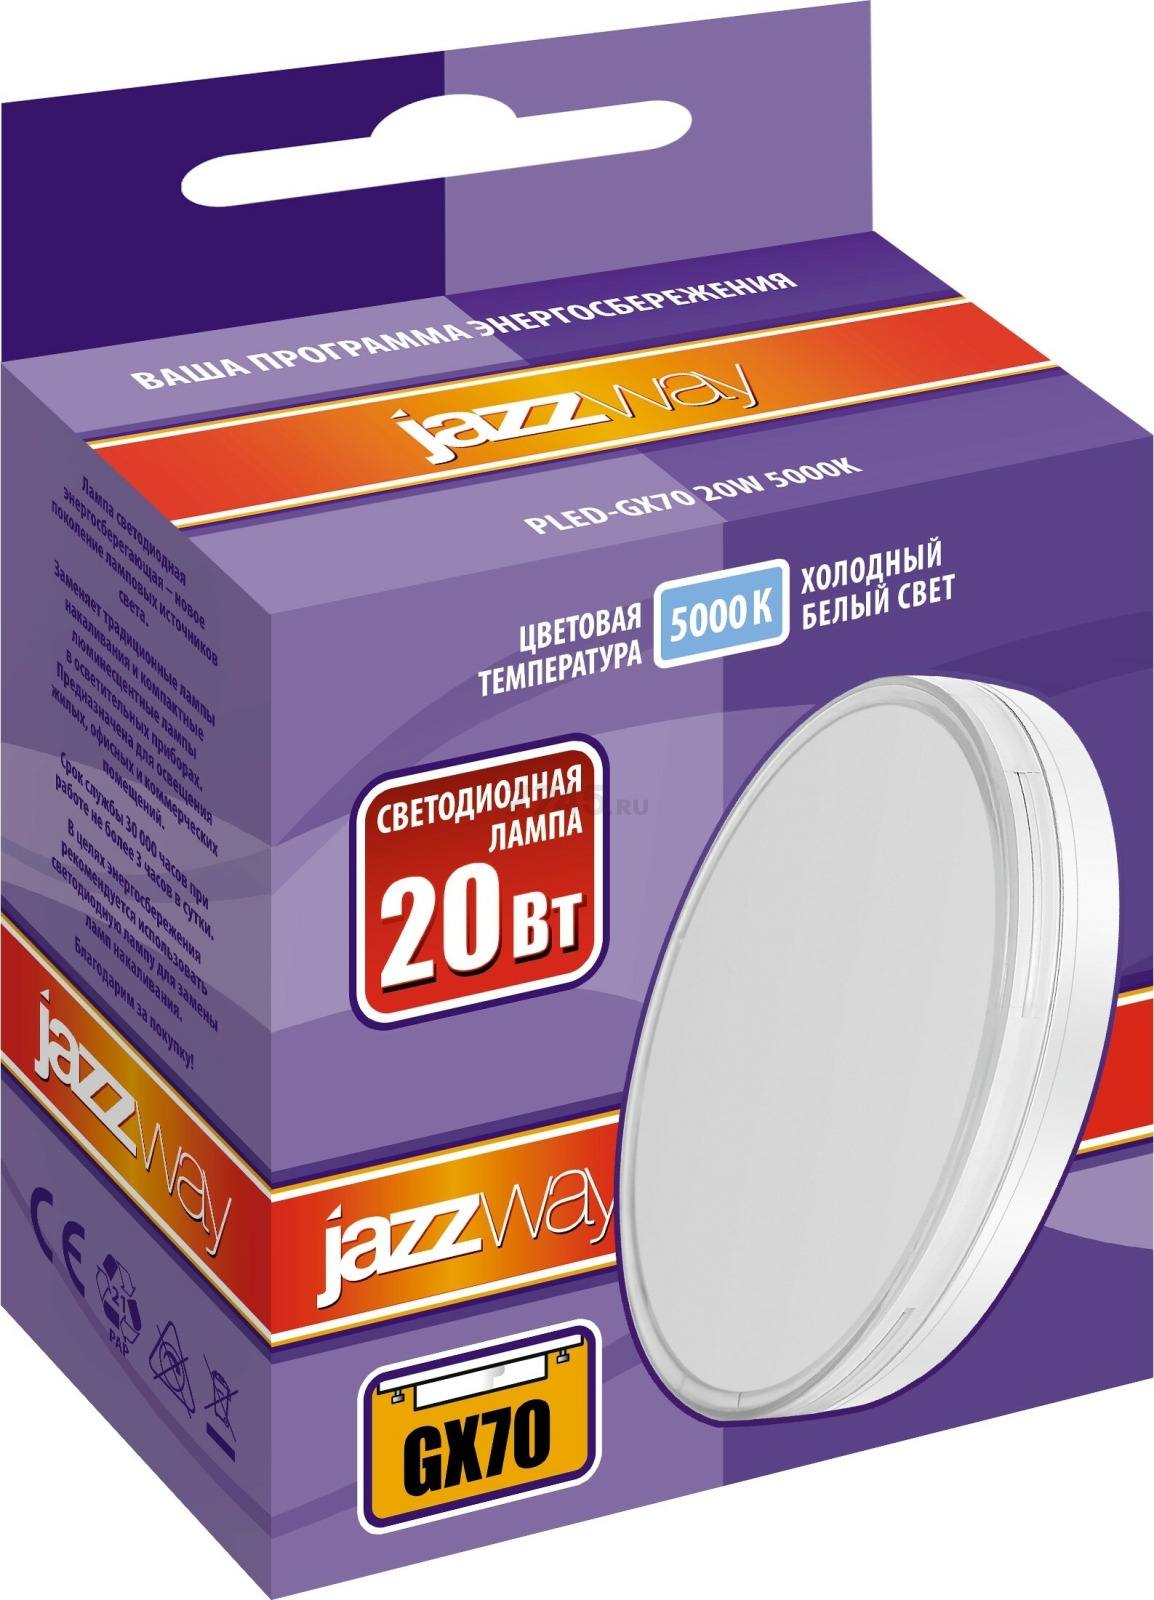 Лампа светодиодная GX70 JAZZWAY PLED-GX таблетка 20 Вт 5000К (1027696A)